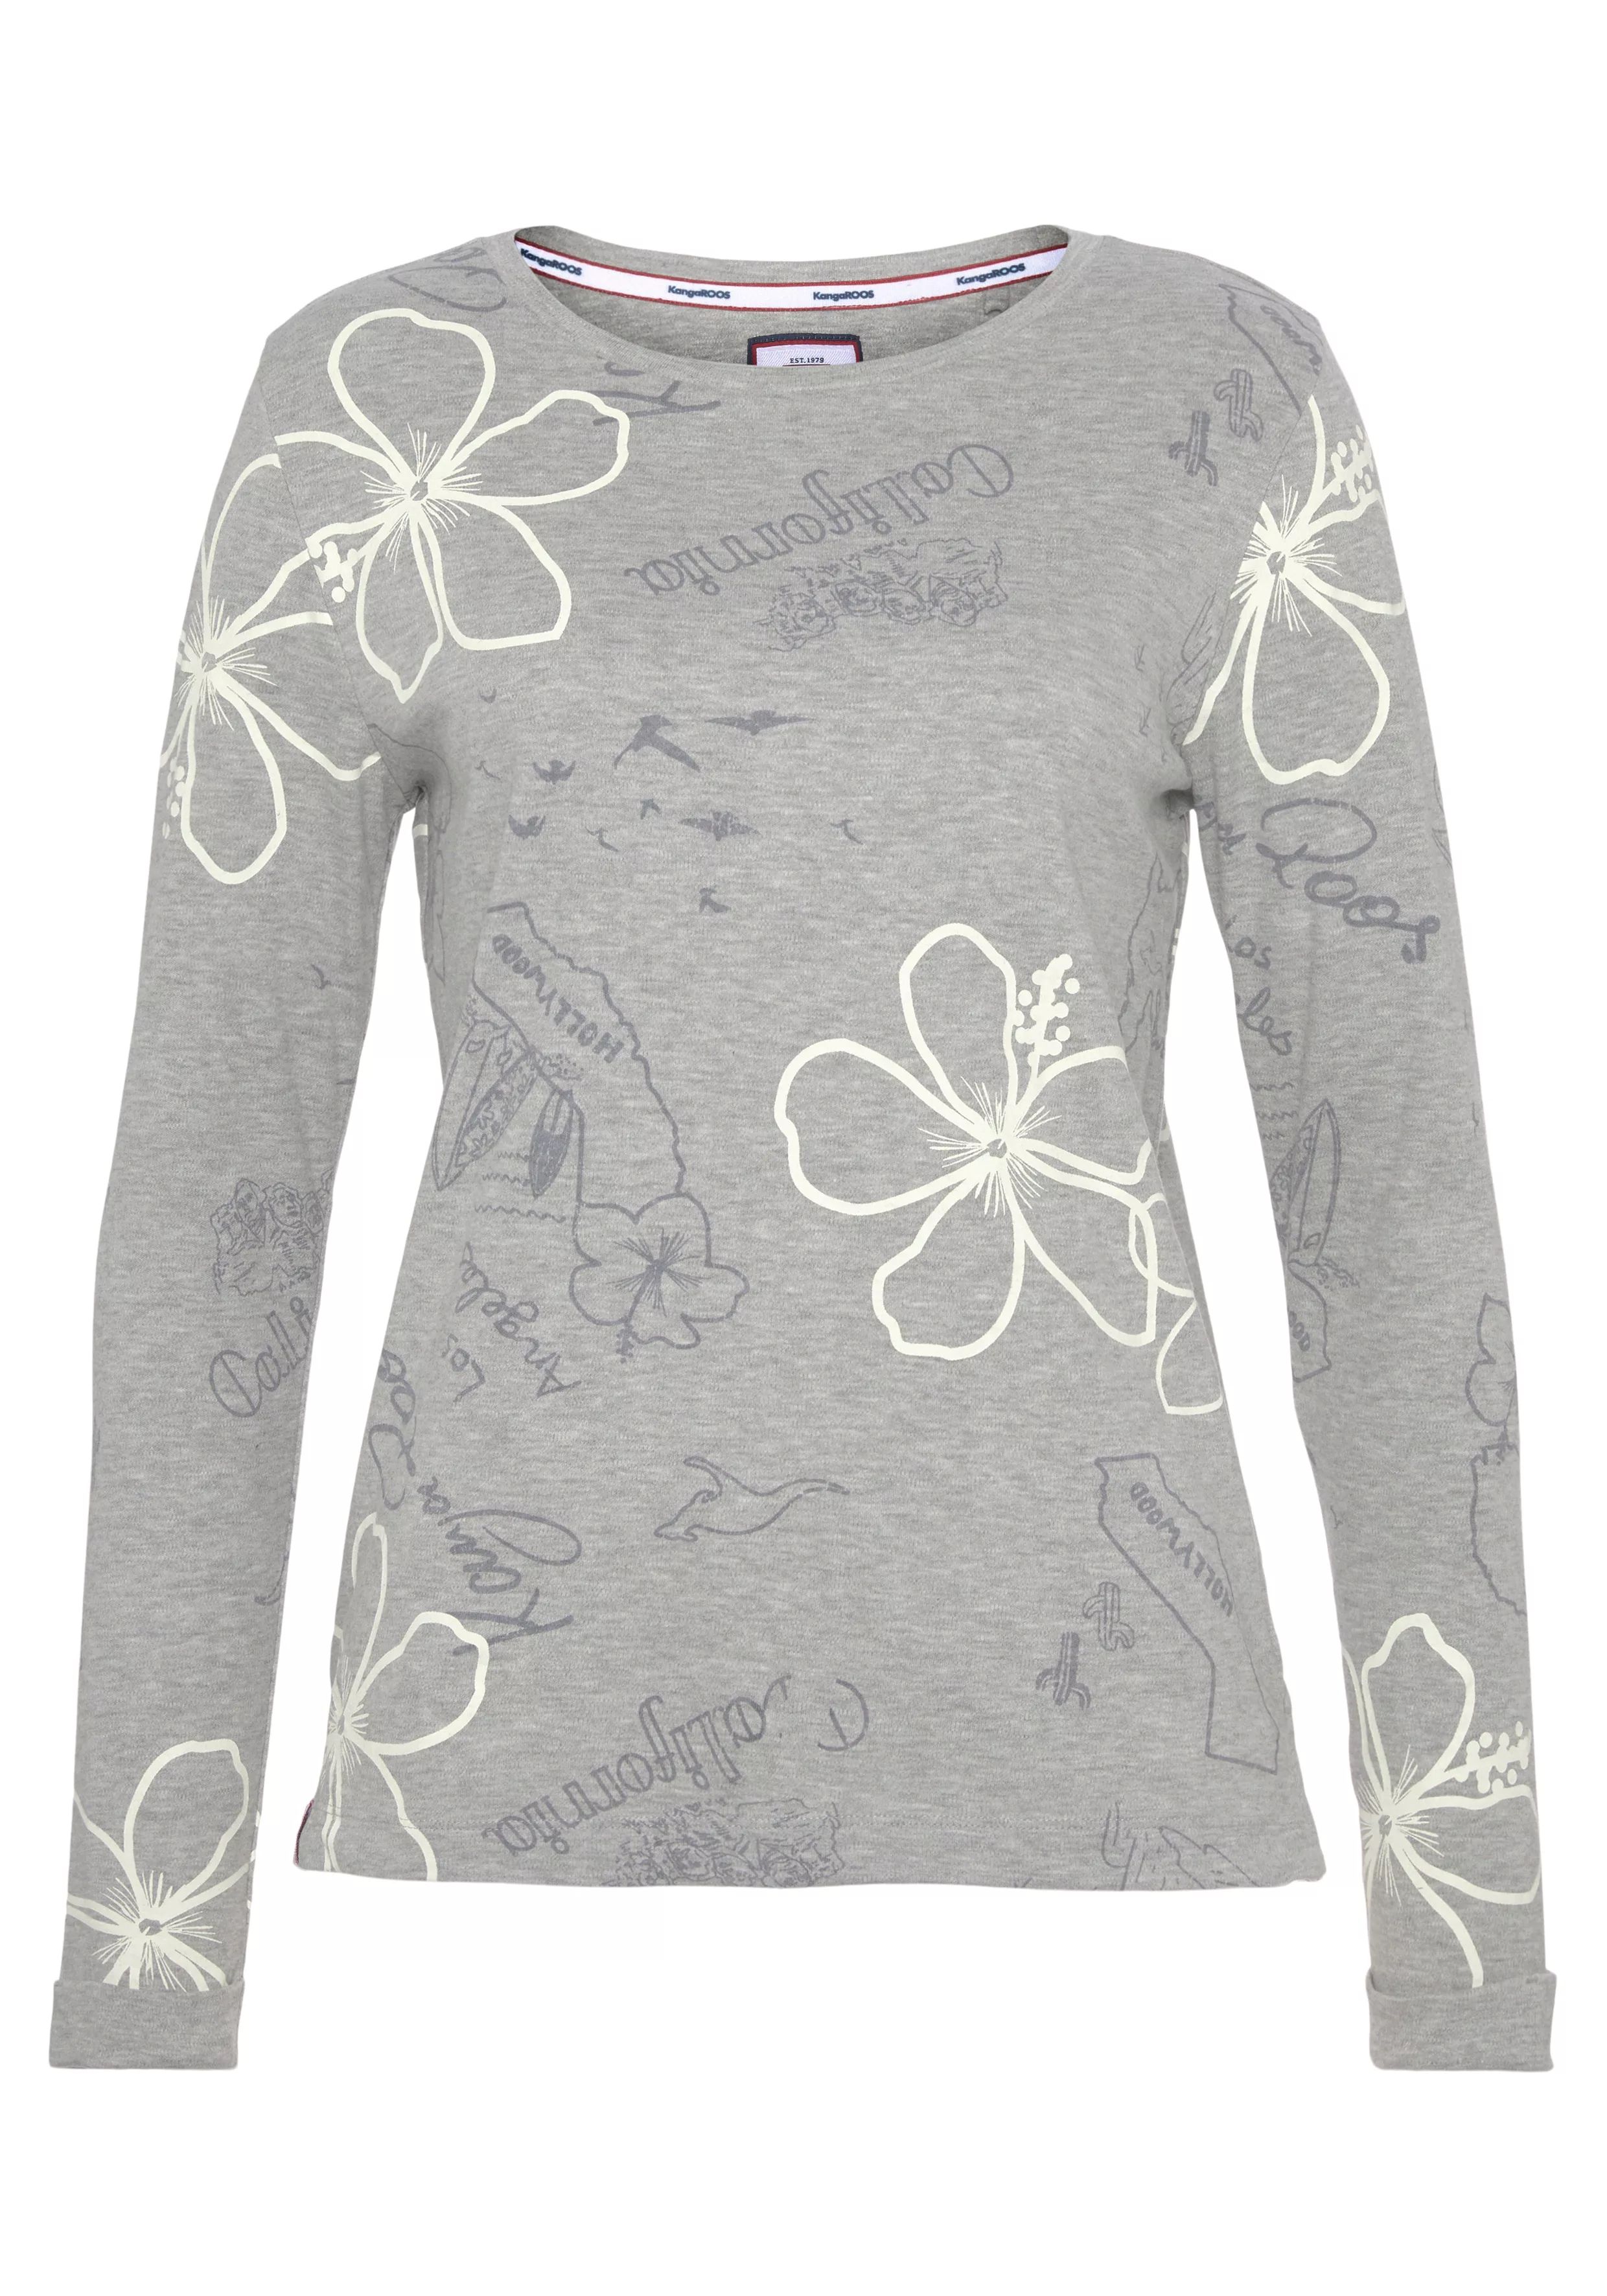 KangaROOS Sweatshirt, mi tollem Alloverprint im American-Style - NEUE KOLLE günstig online kaufen